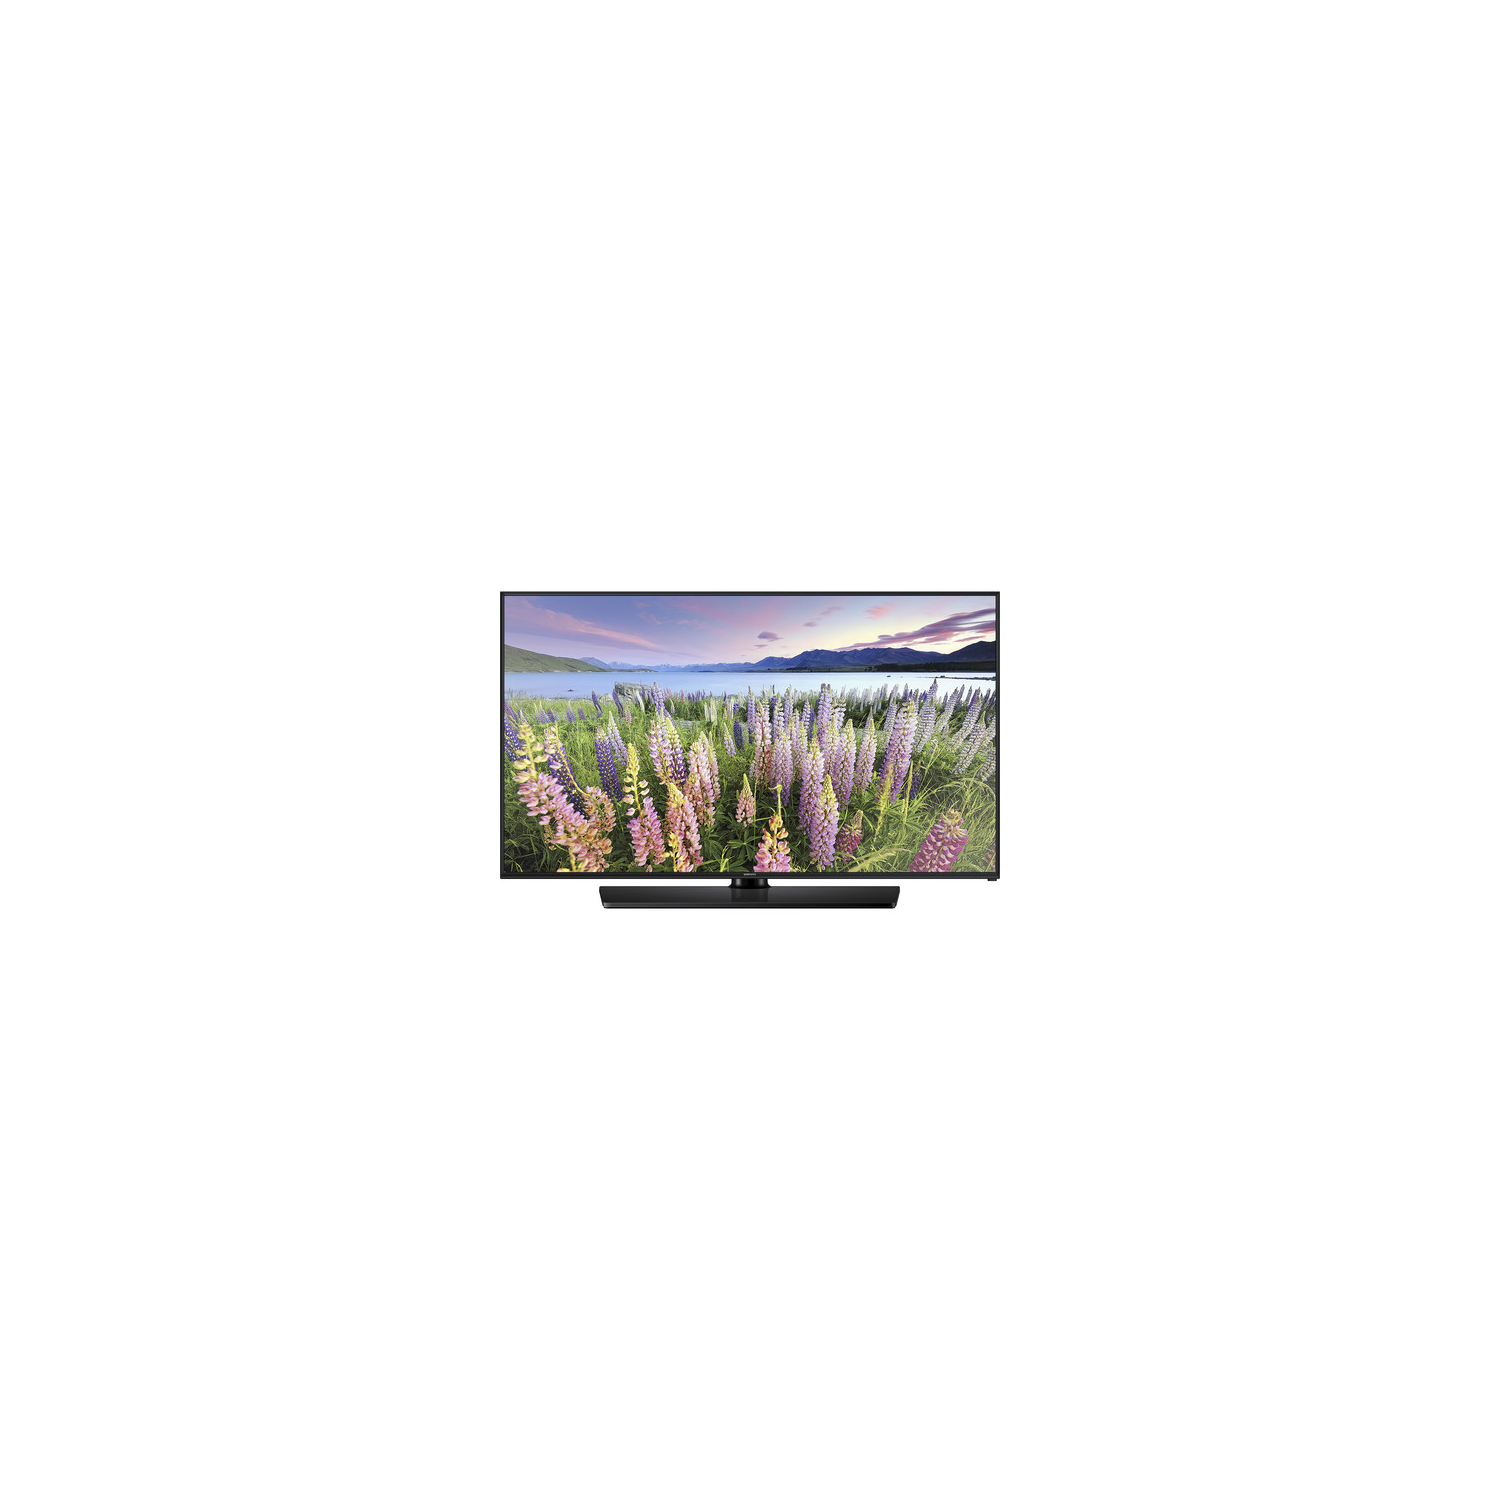 Samsung 470 Series 55" Full HD Hospitality TV (Black) - (HG55NE470BFXZA)